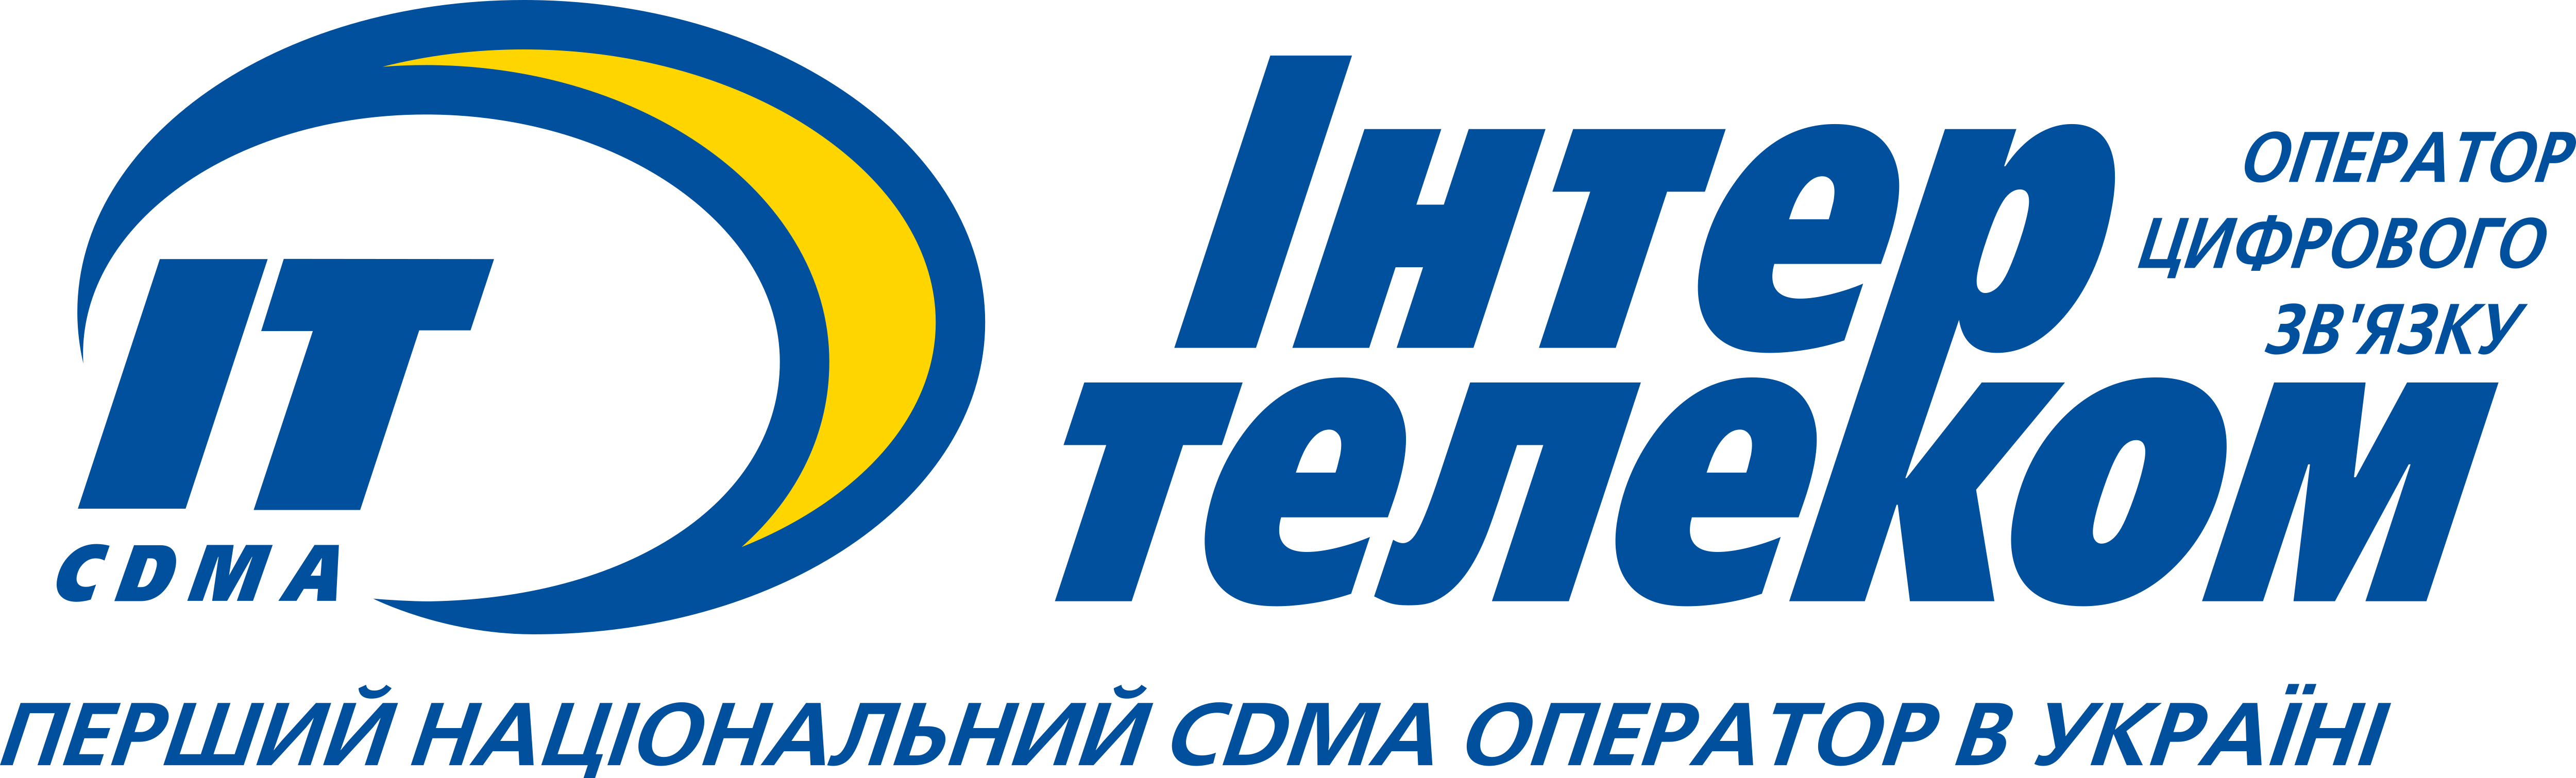 CDMA Logo - Intertelecom CDMA – Logos Download